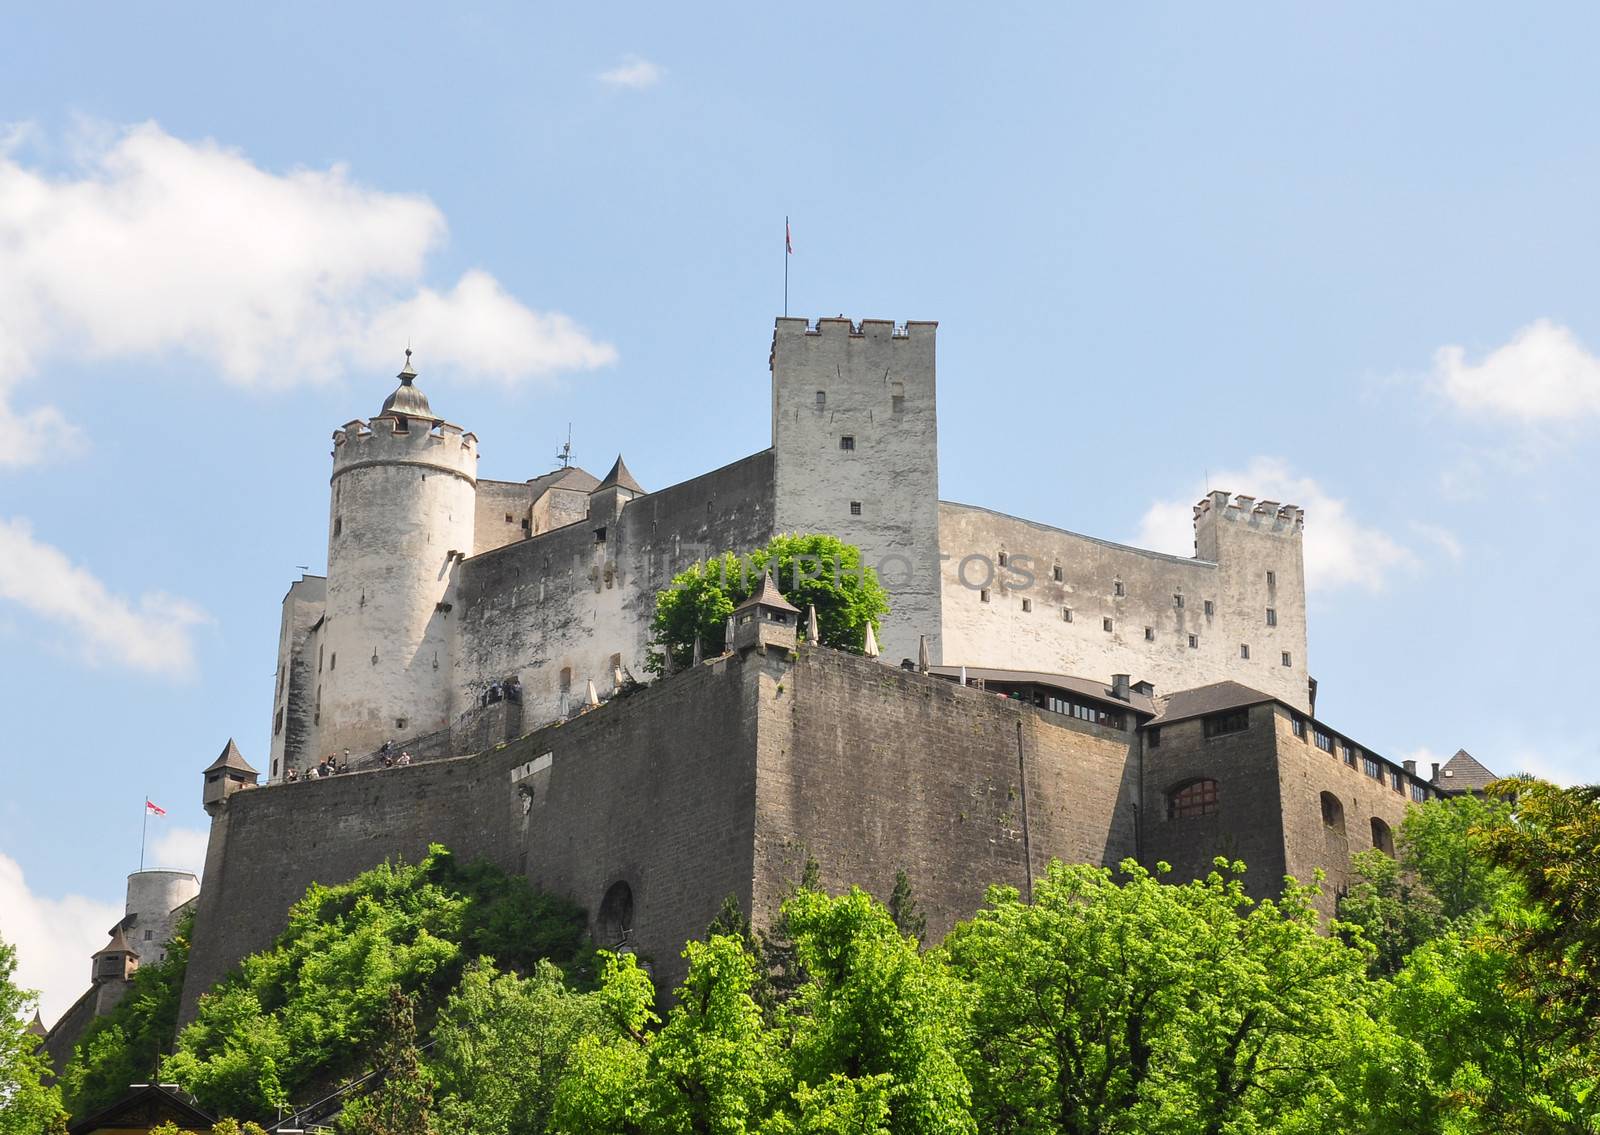 Festung Hohensalzburg in Salzburg by rbiedermann